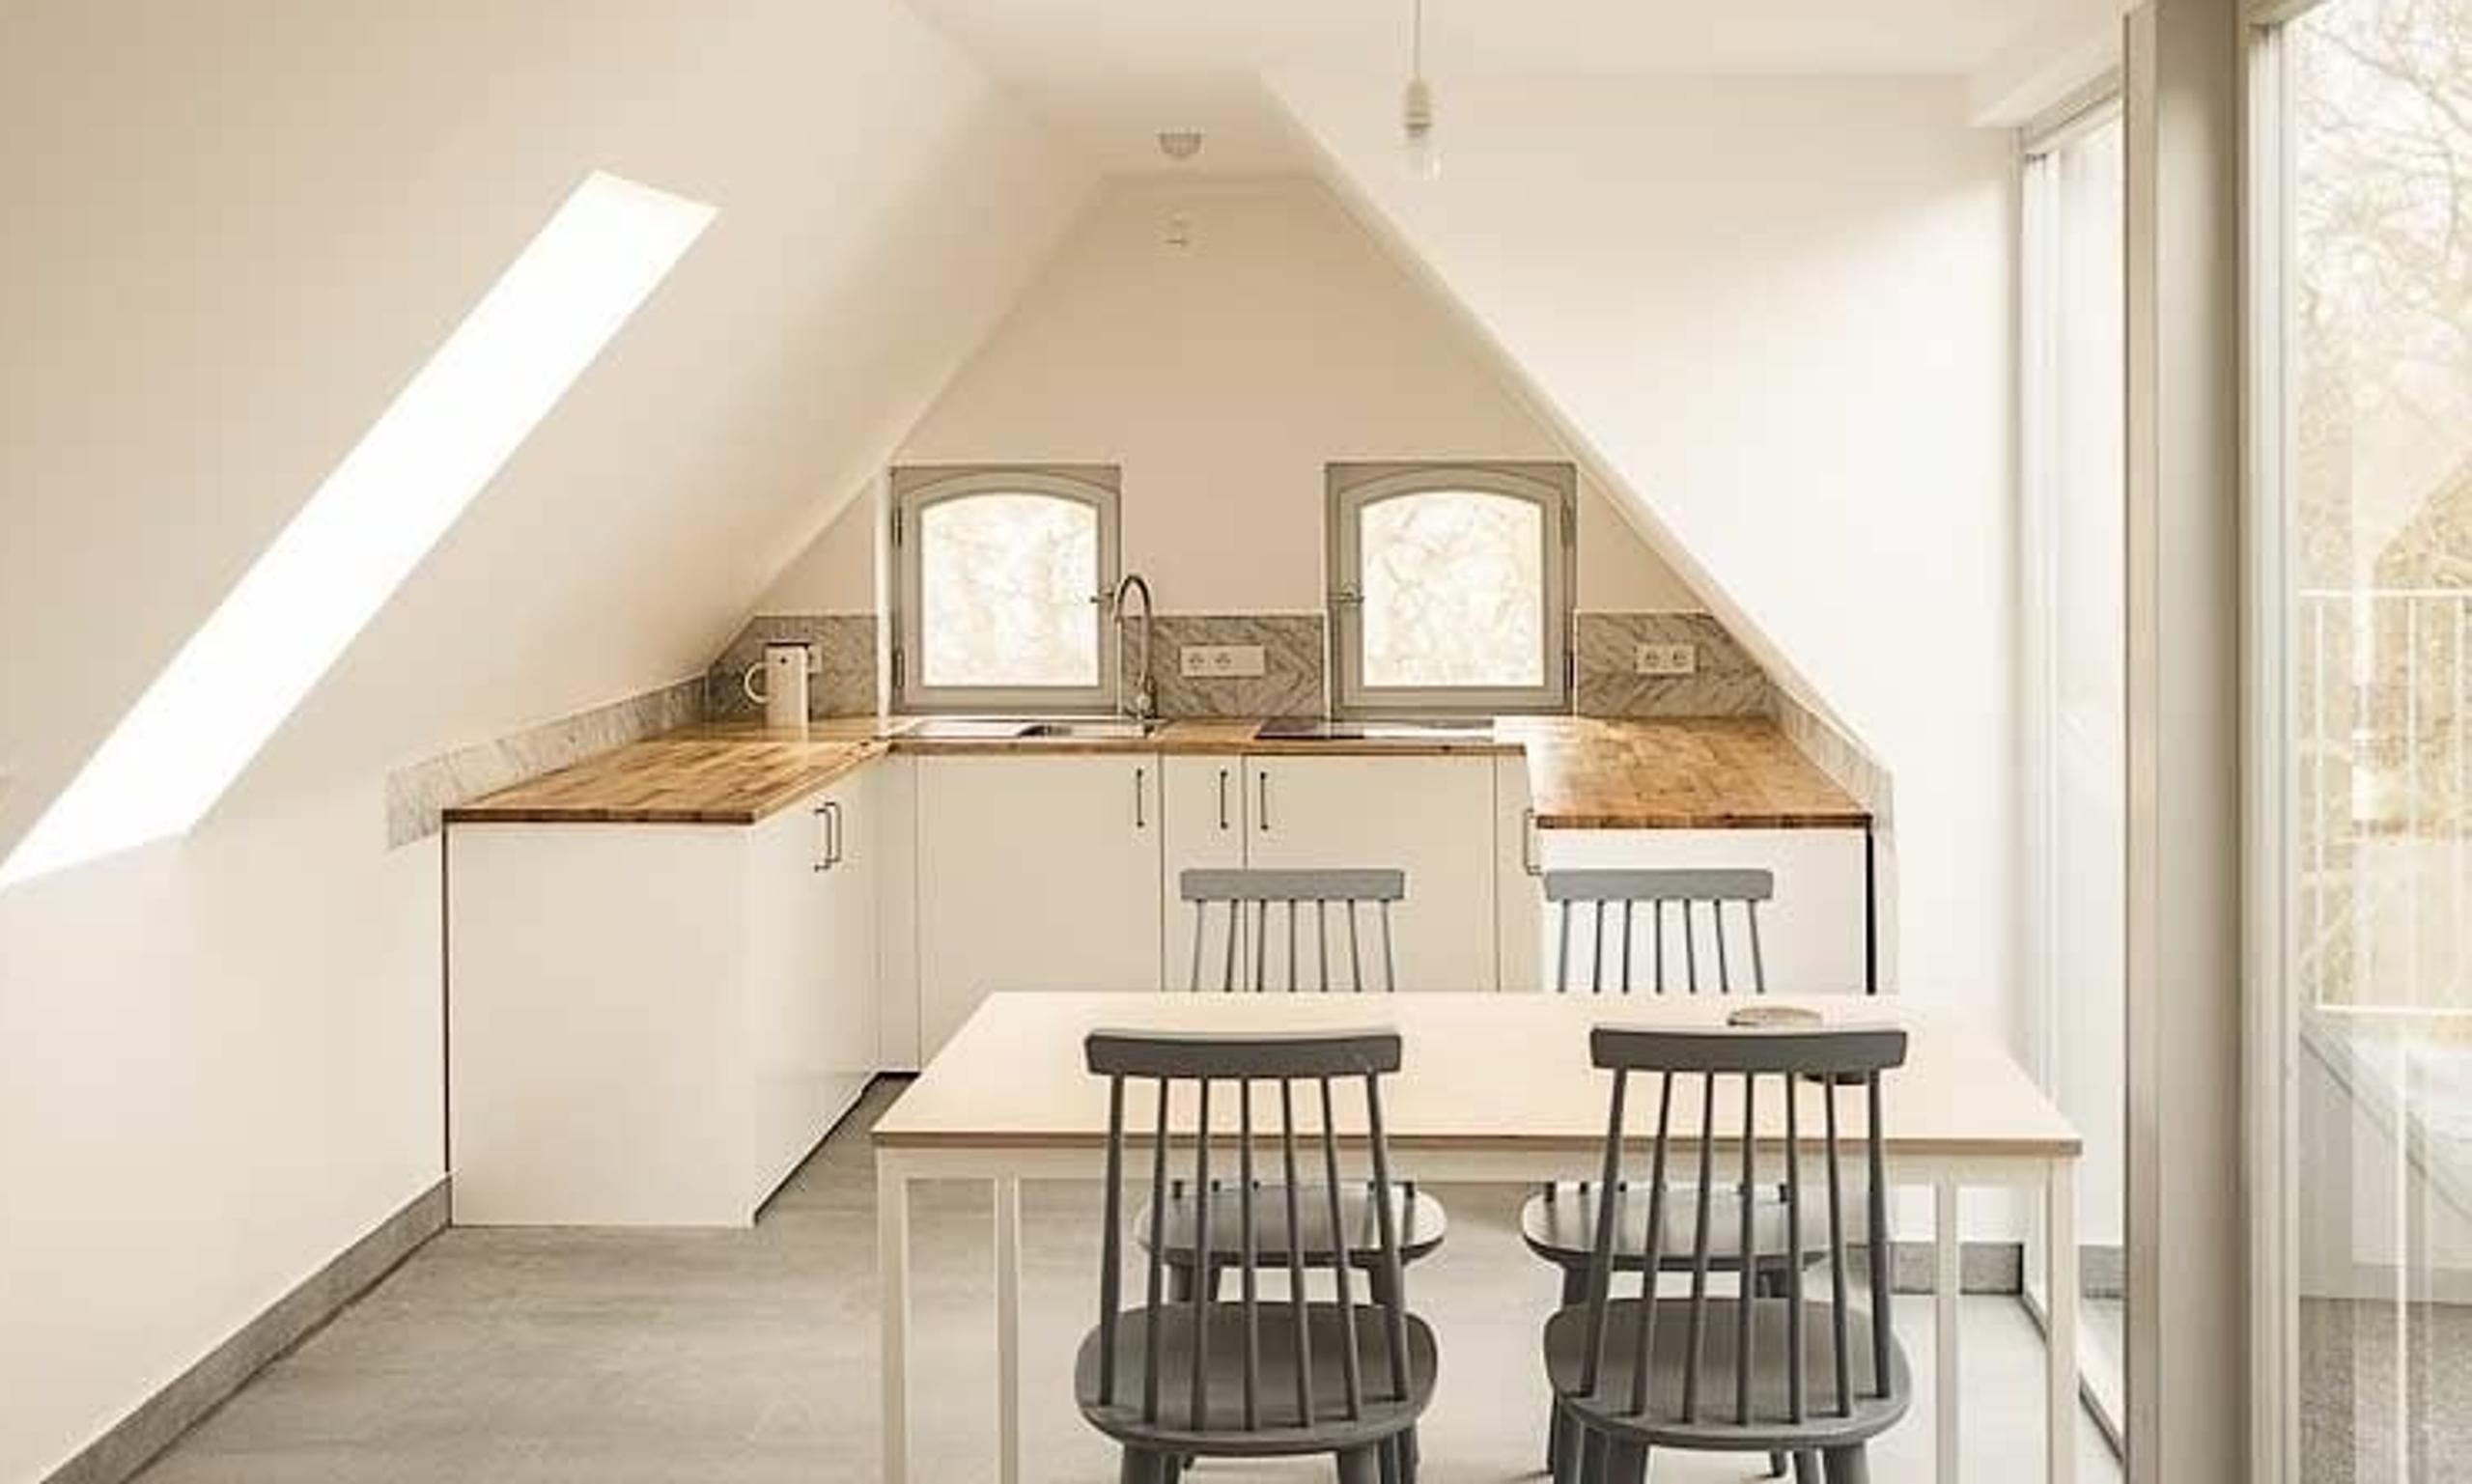 Minimalist kitchen interior